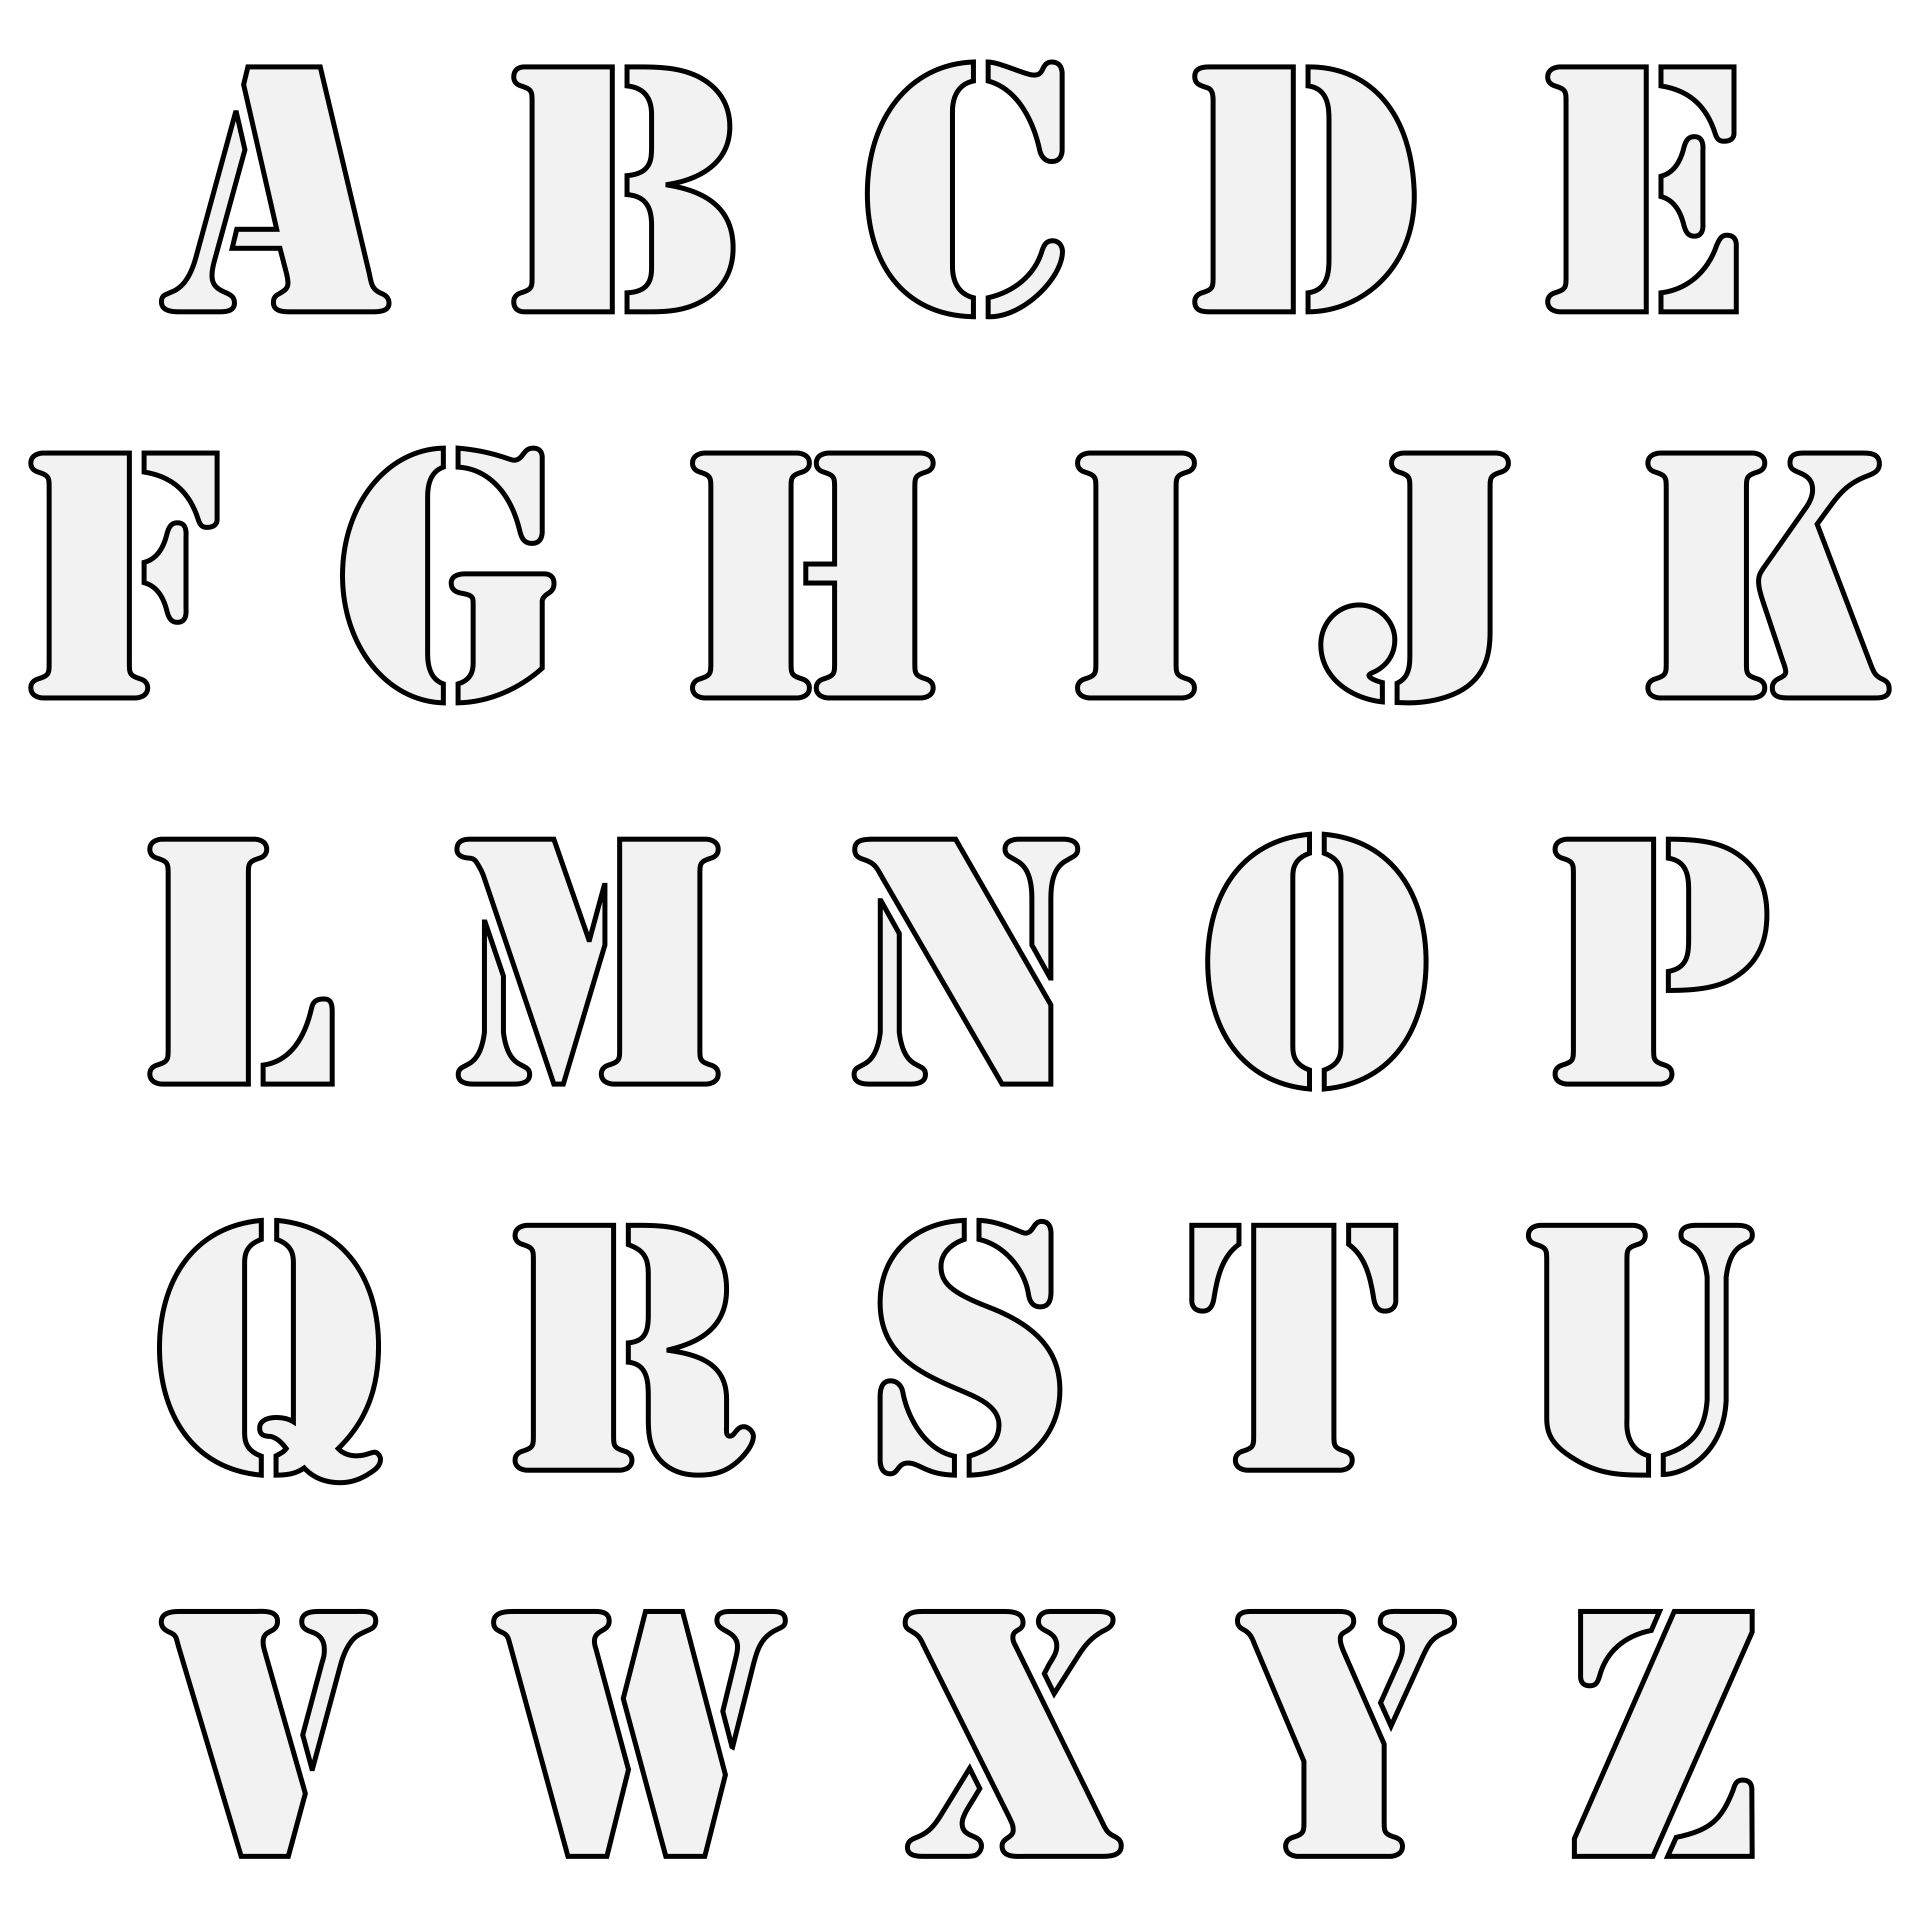 printable-letters-cut-out-letter-a-cut-out-template-alphabet-letter-a-coloring-page